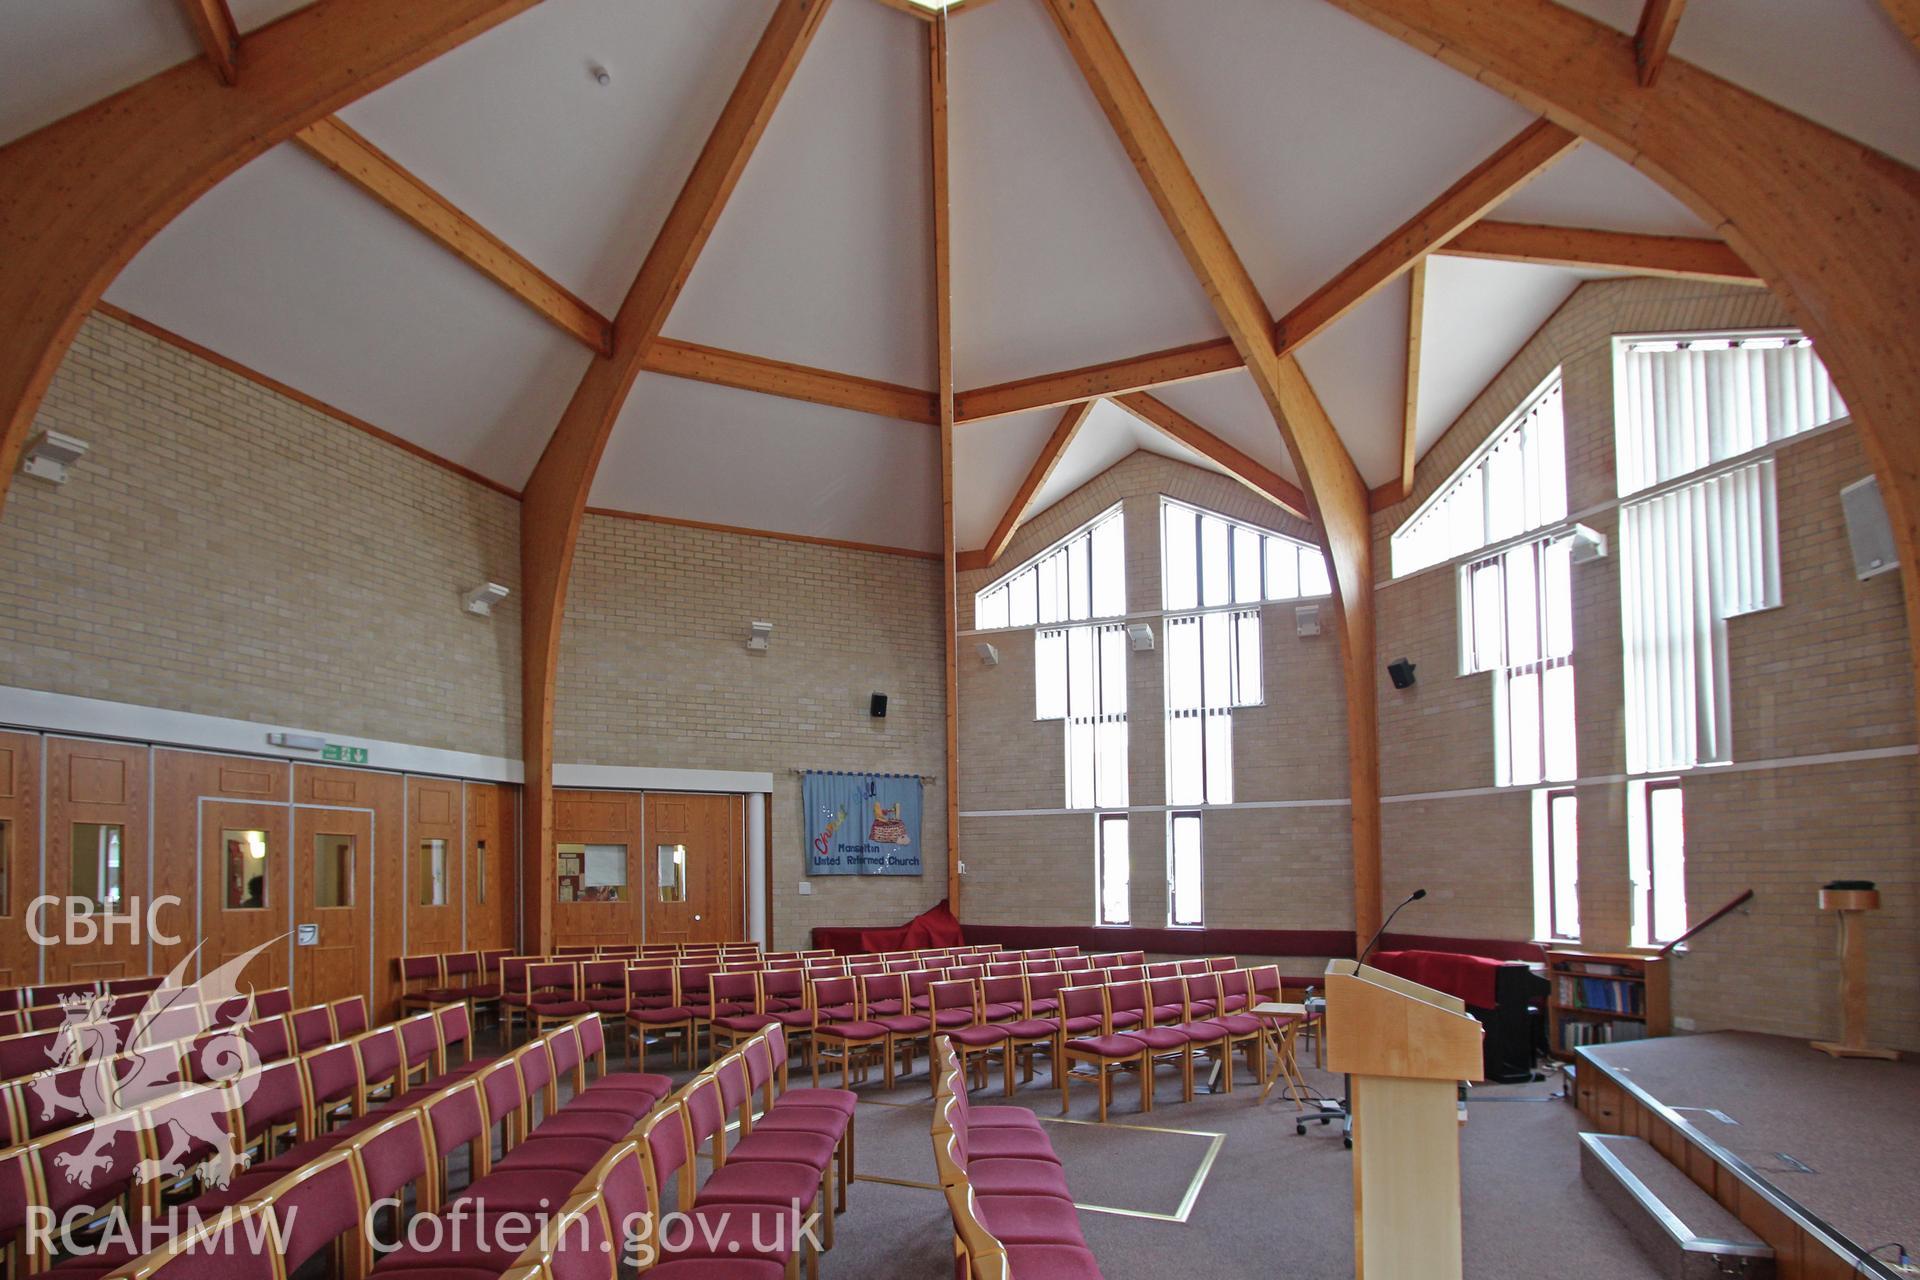 Manselton URC Chapel, Swansea, interior looking north-east